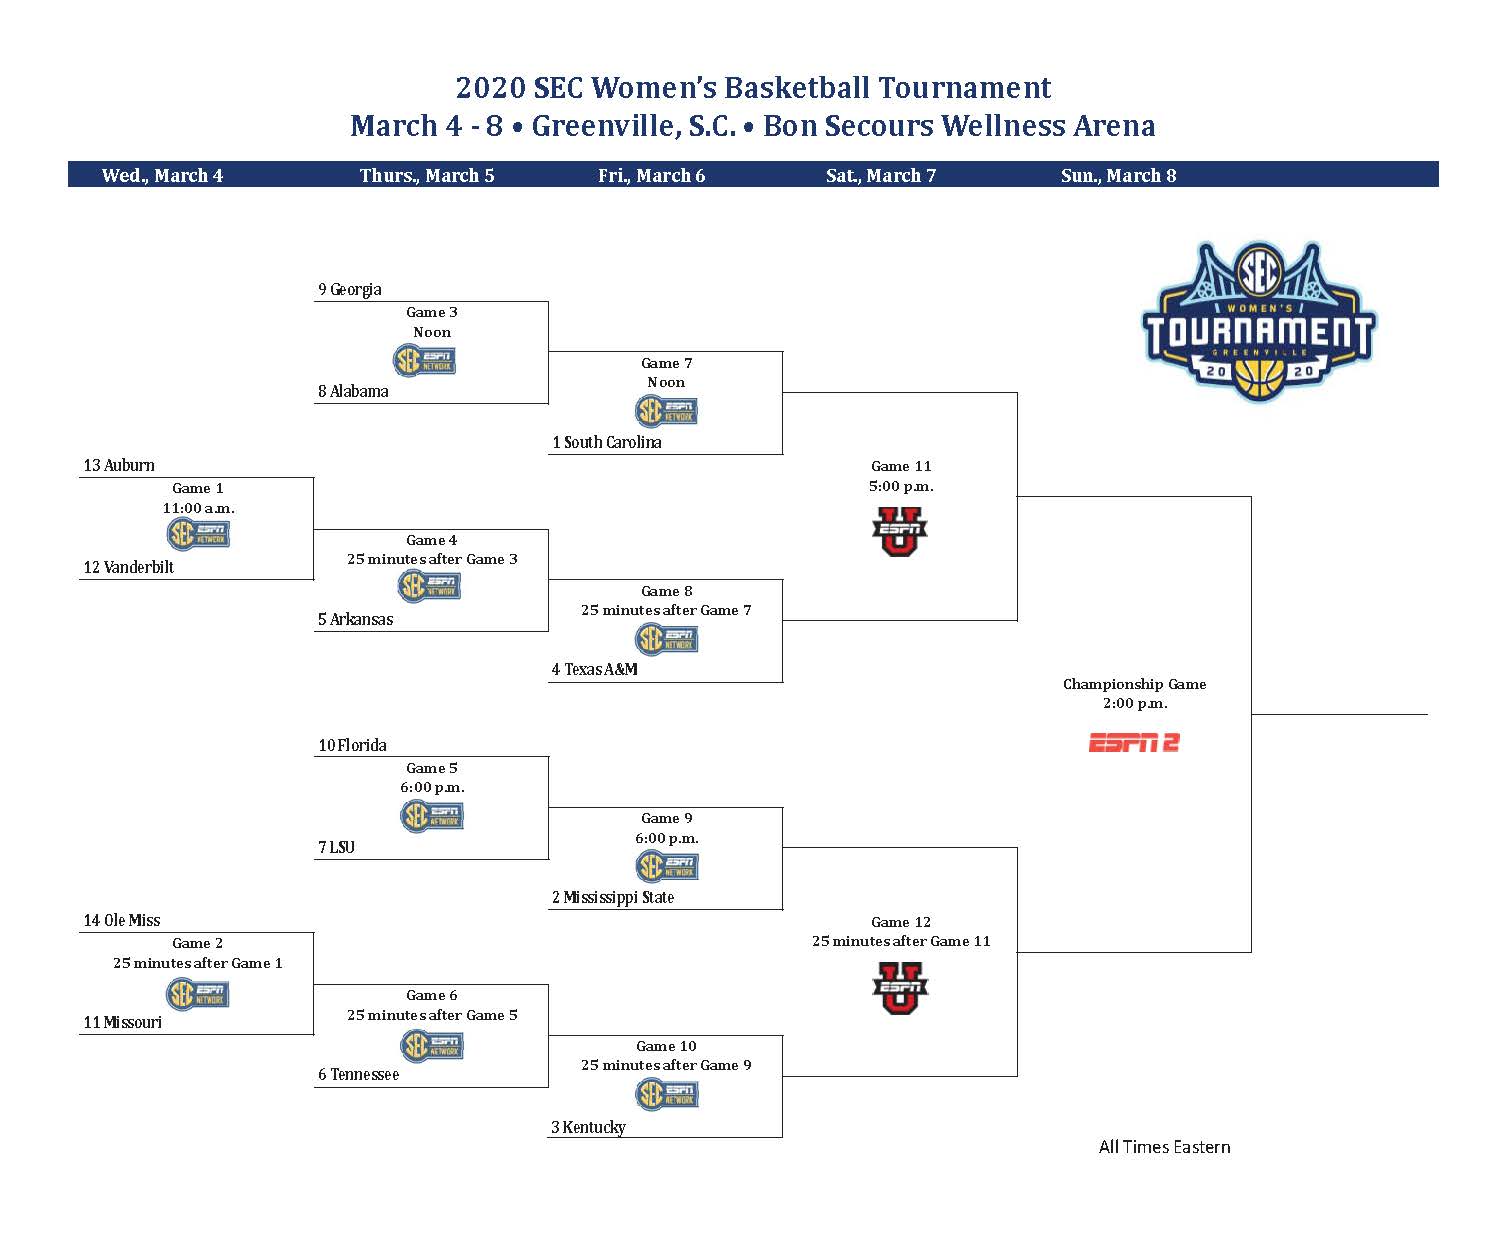 SEC Women’s Basketball Tournament begins Wednesday in Greenville WCBD